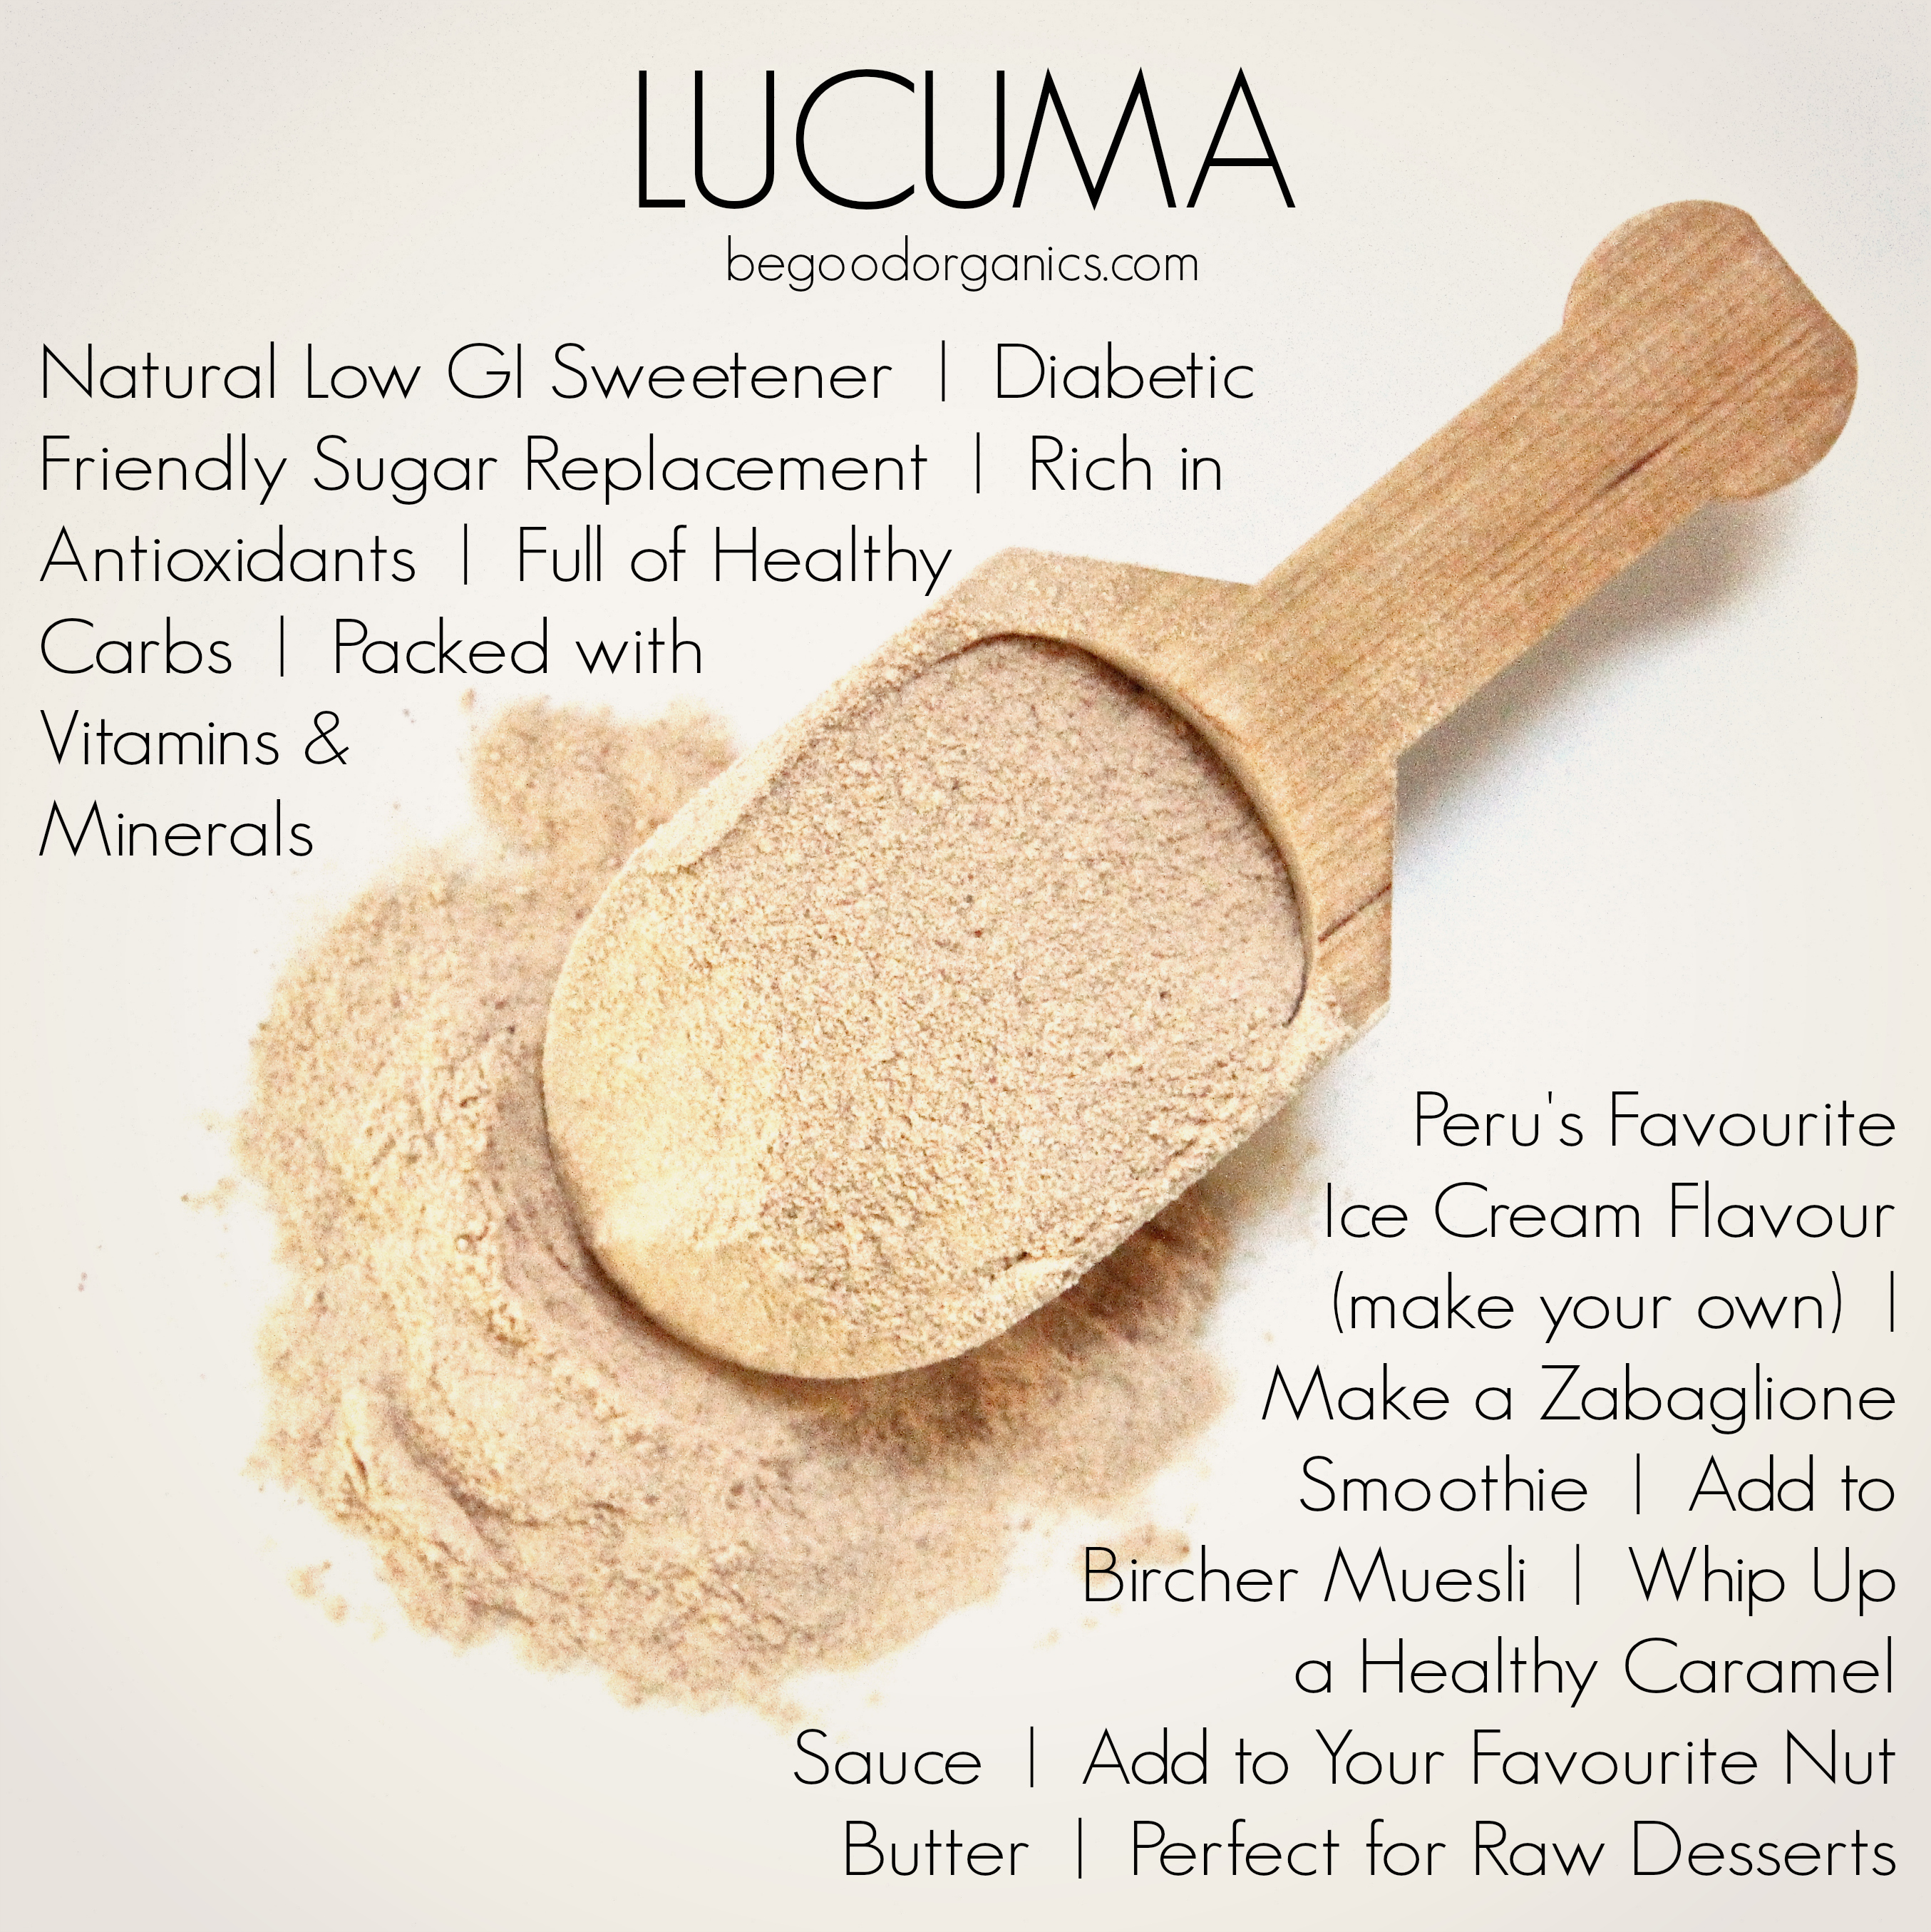 Lucuma Infographic 